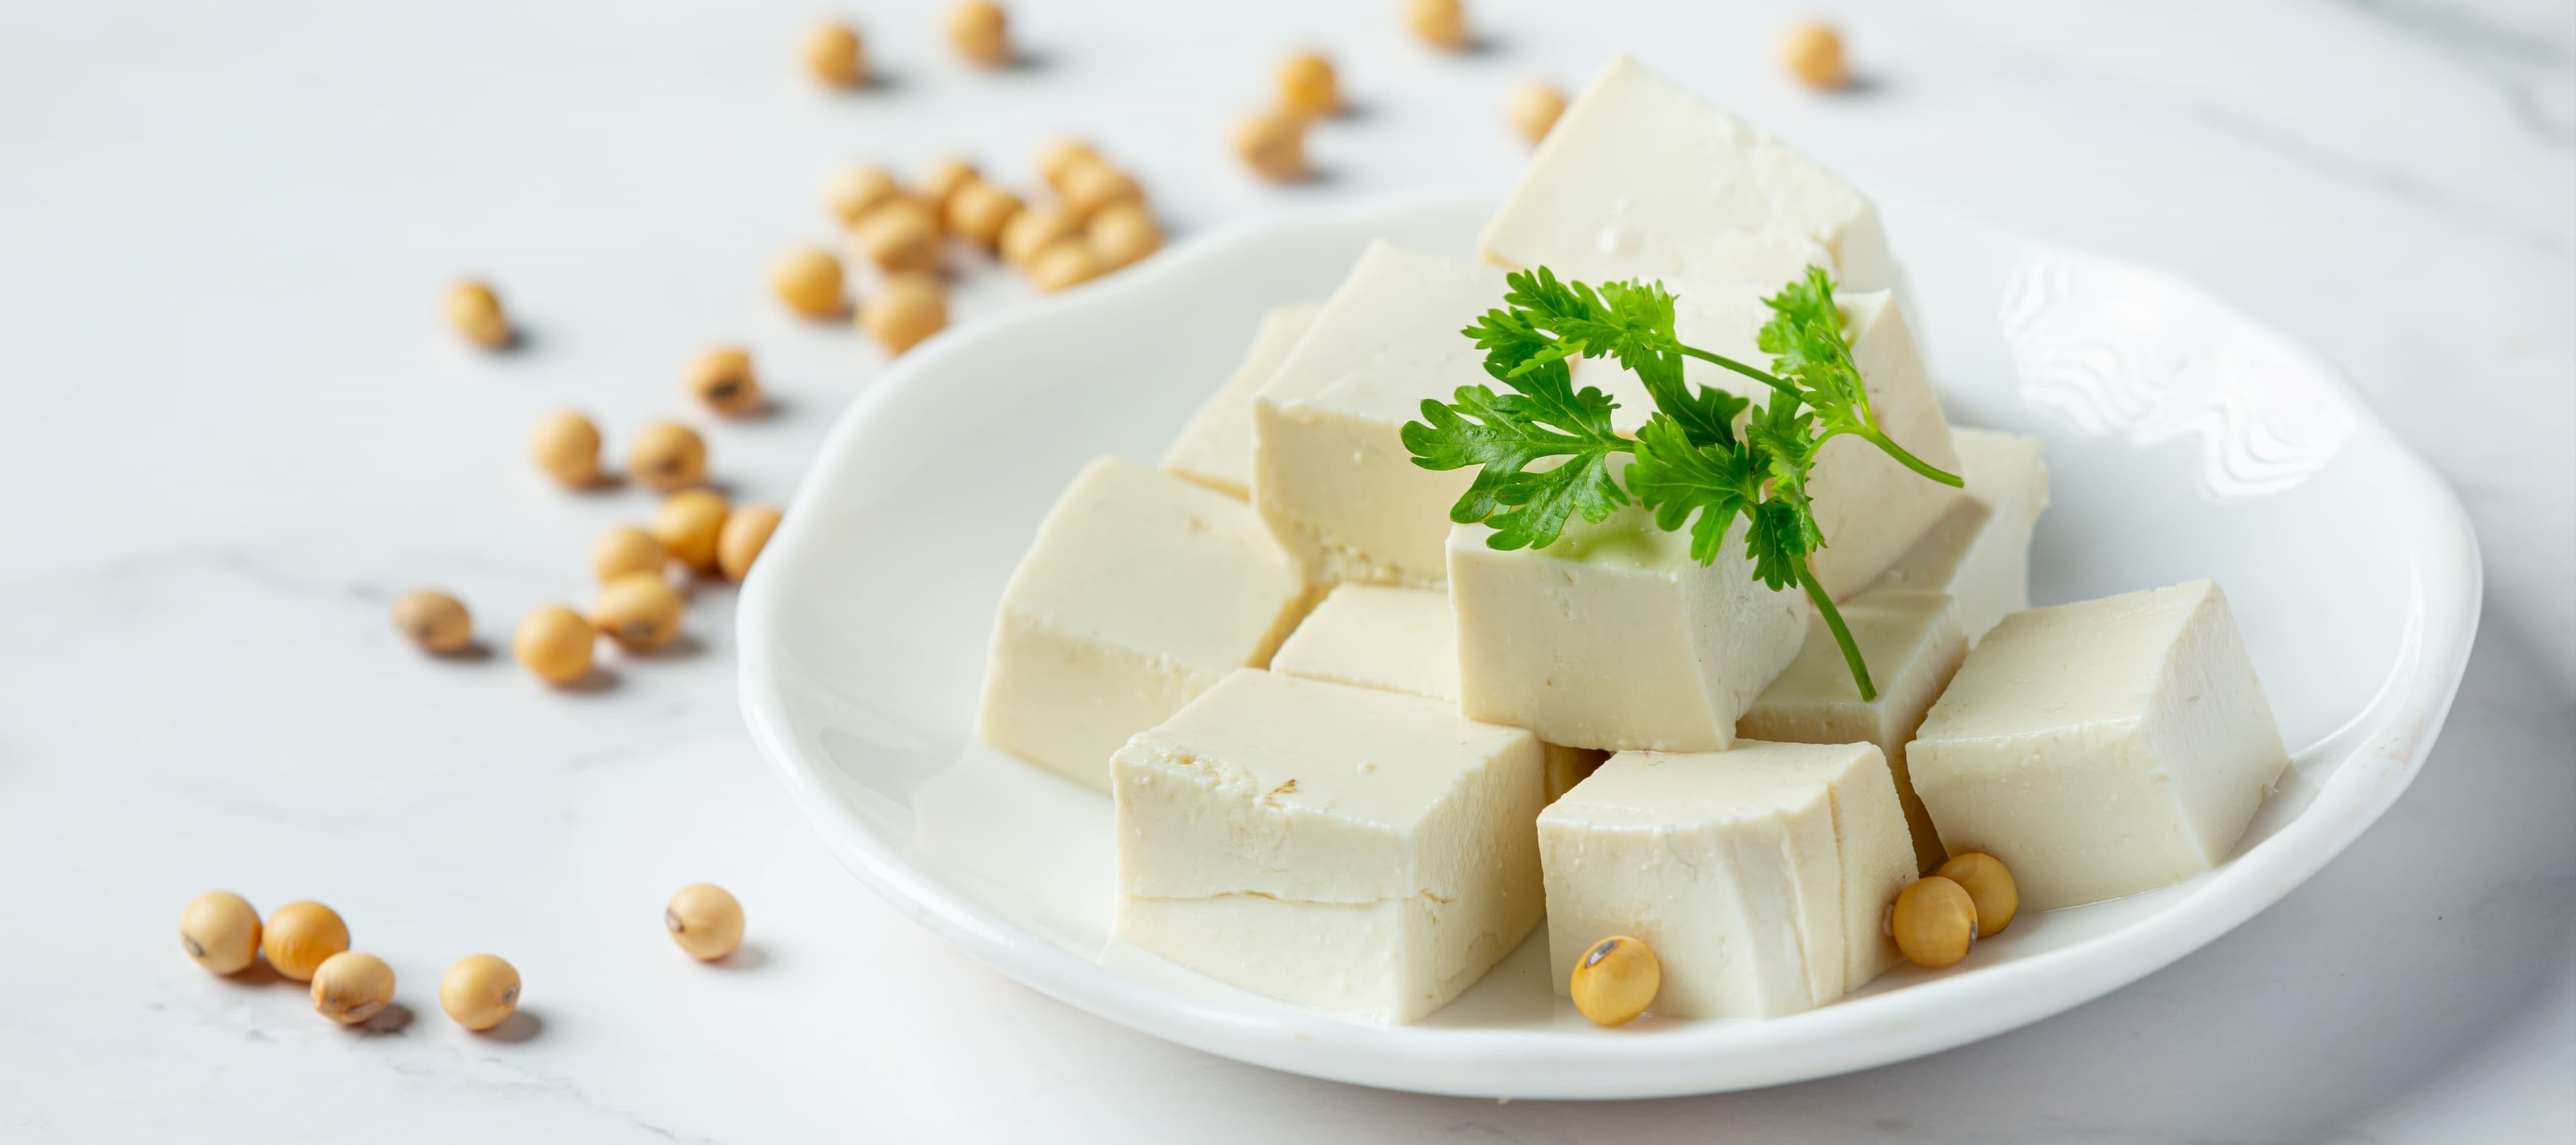 Фото новости: "В Подмосковье запустят производство тофу и инари"